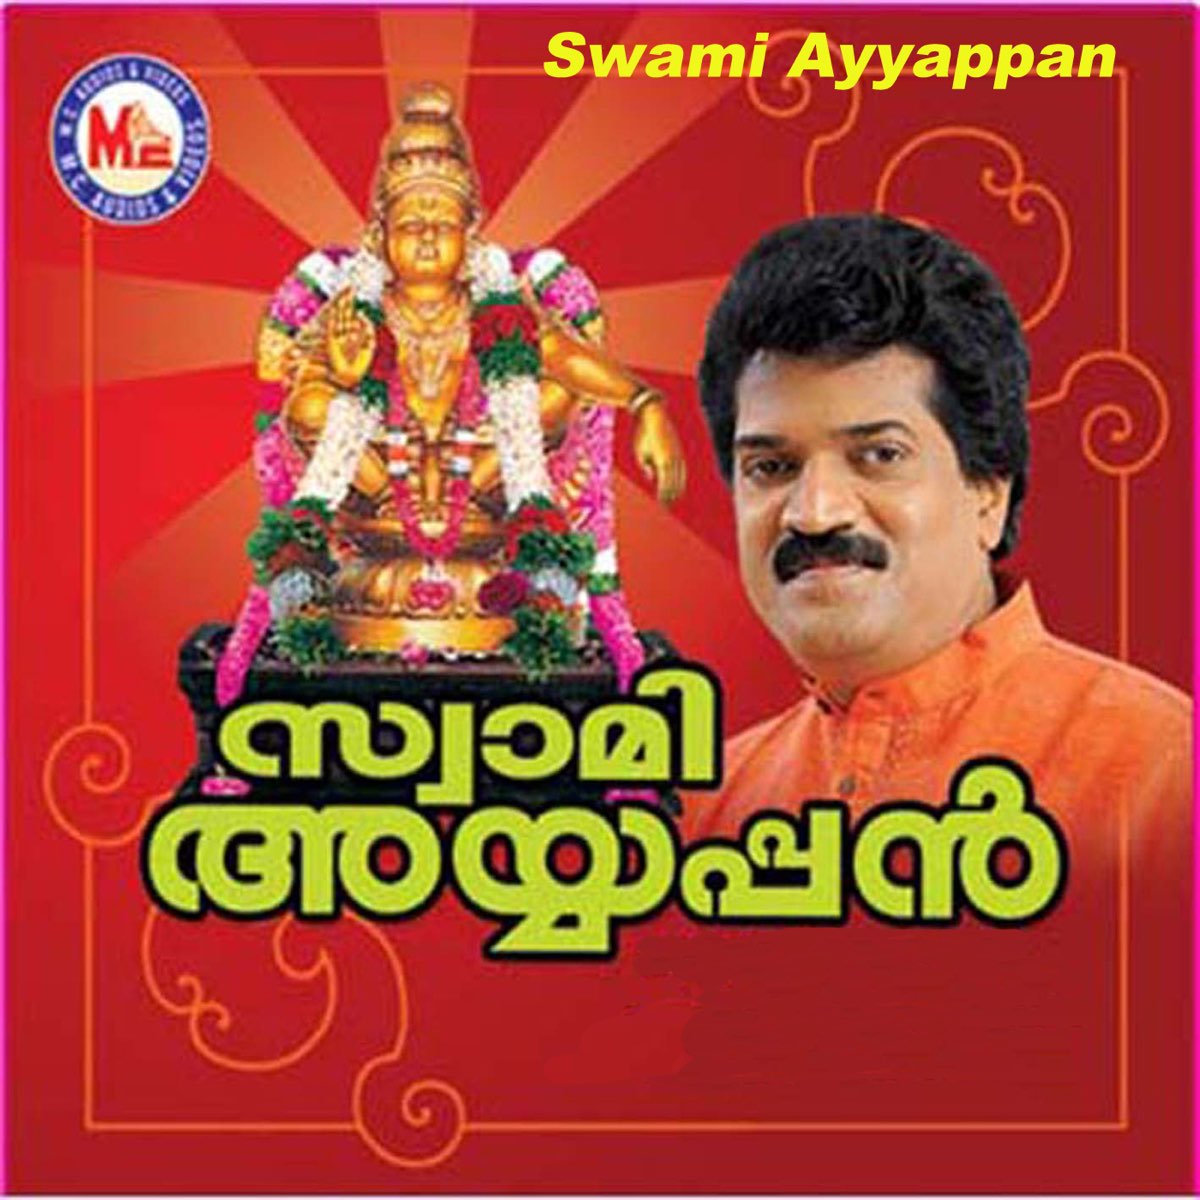 Swami Ayyappan by Unni Menon on Apple Music